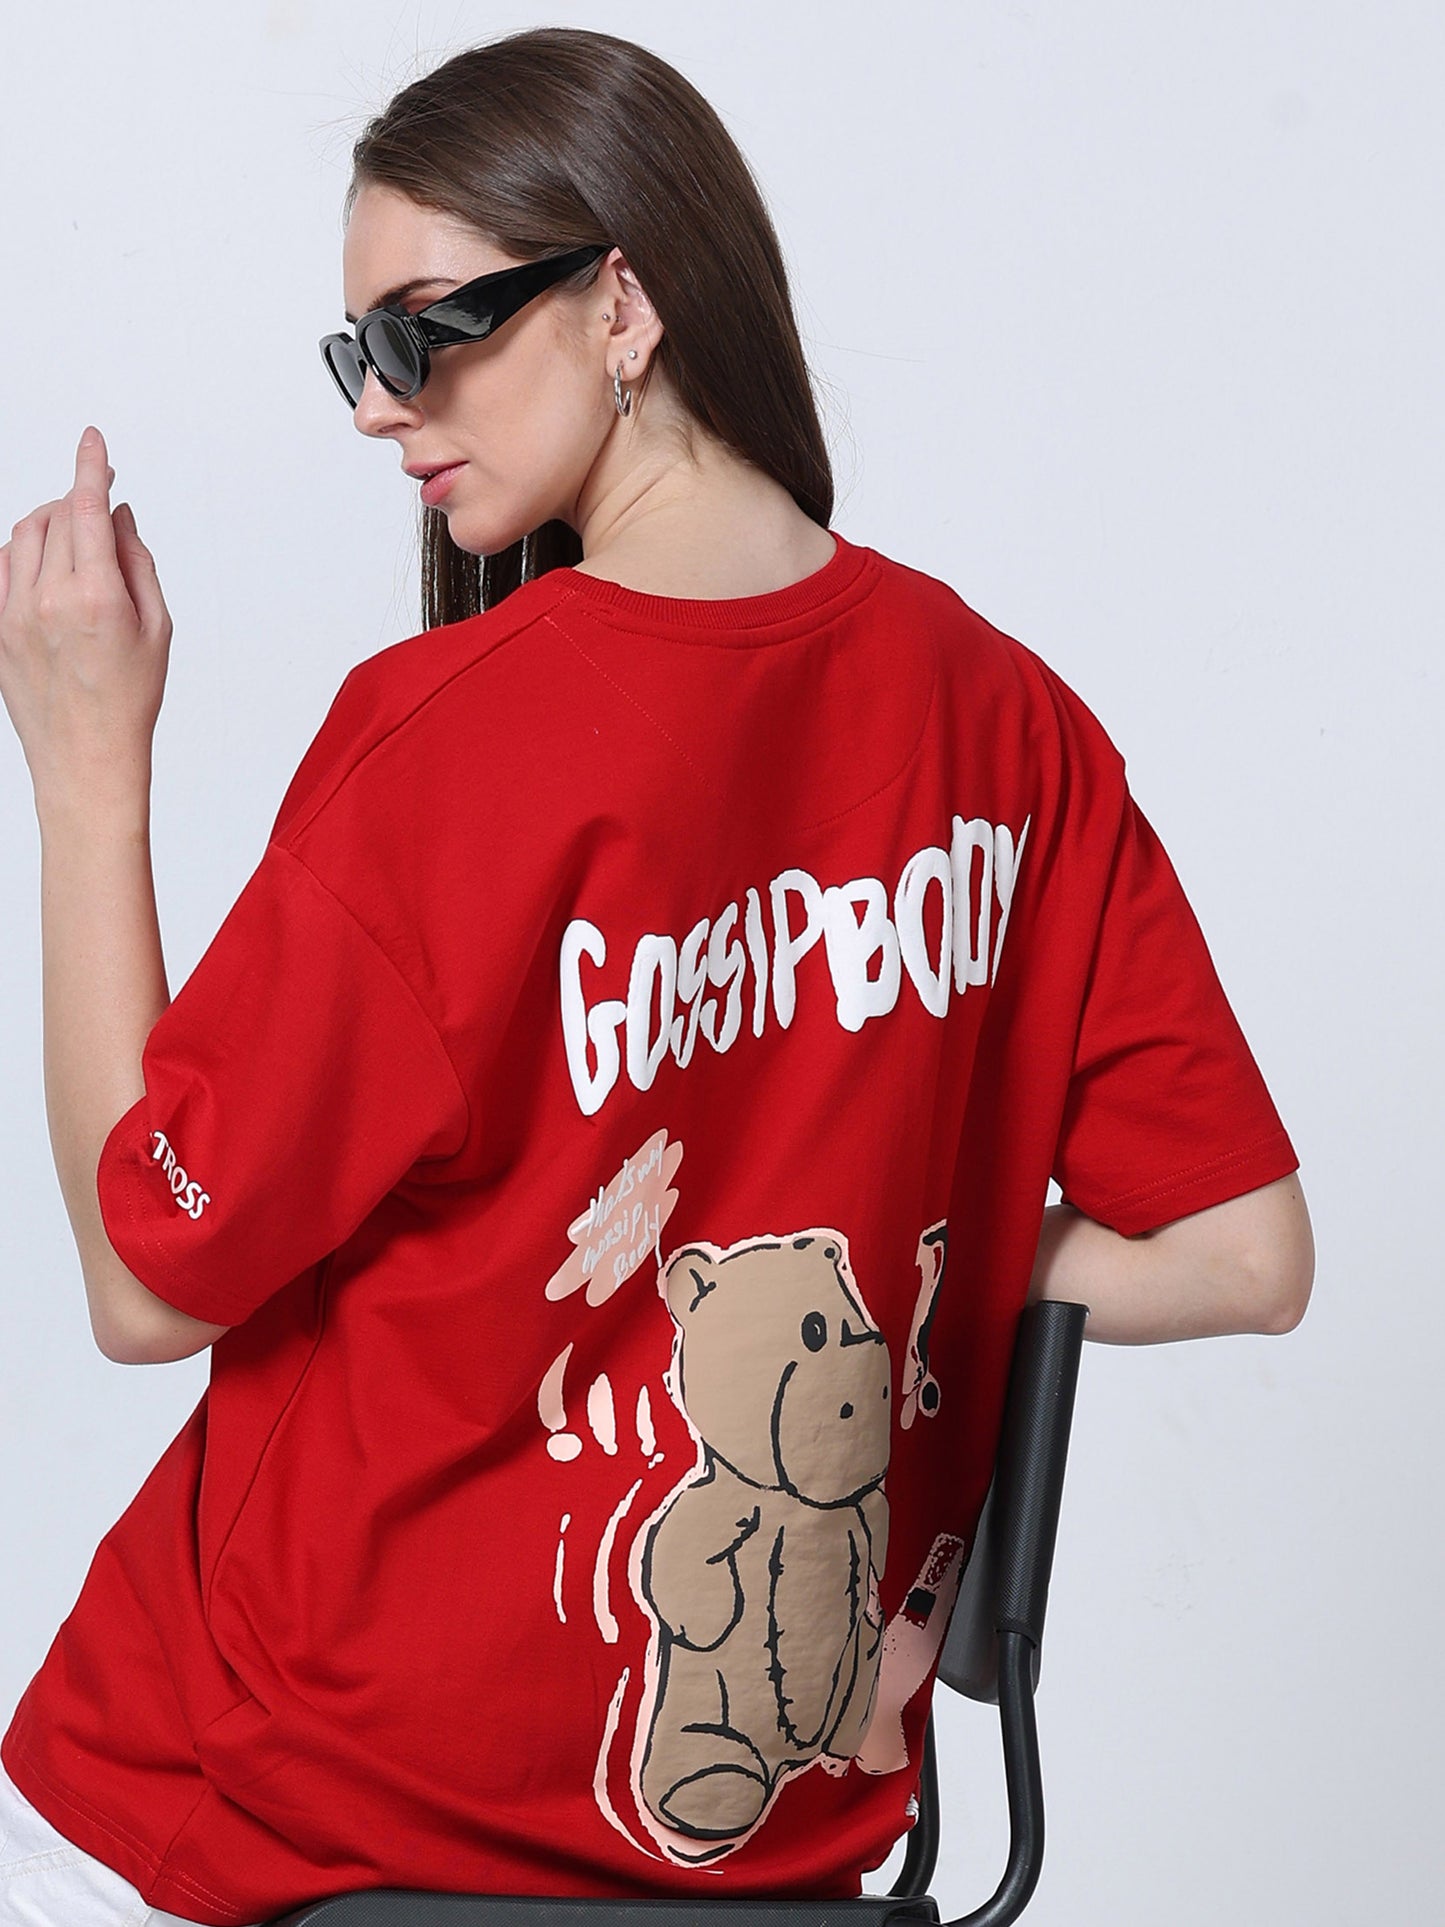 Red Gossip Body Heavy Oversized T-shirt - UNISEX